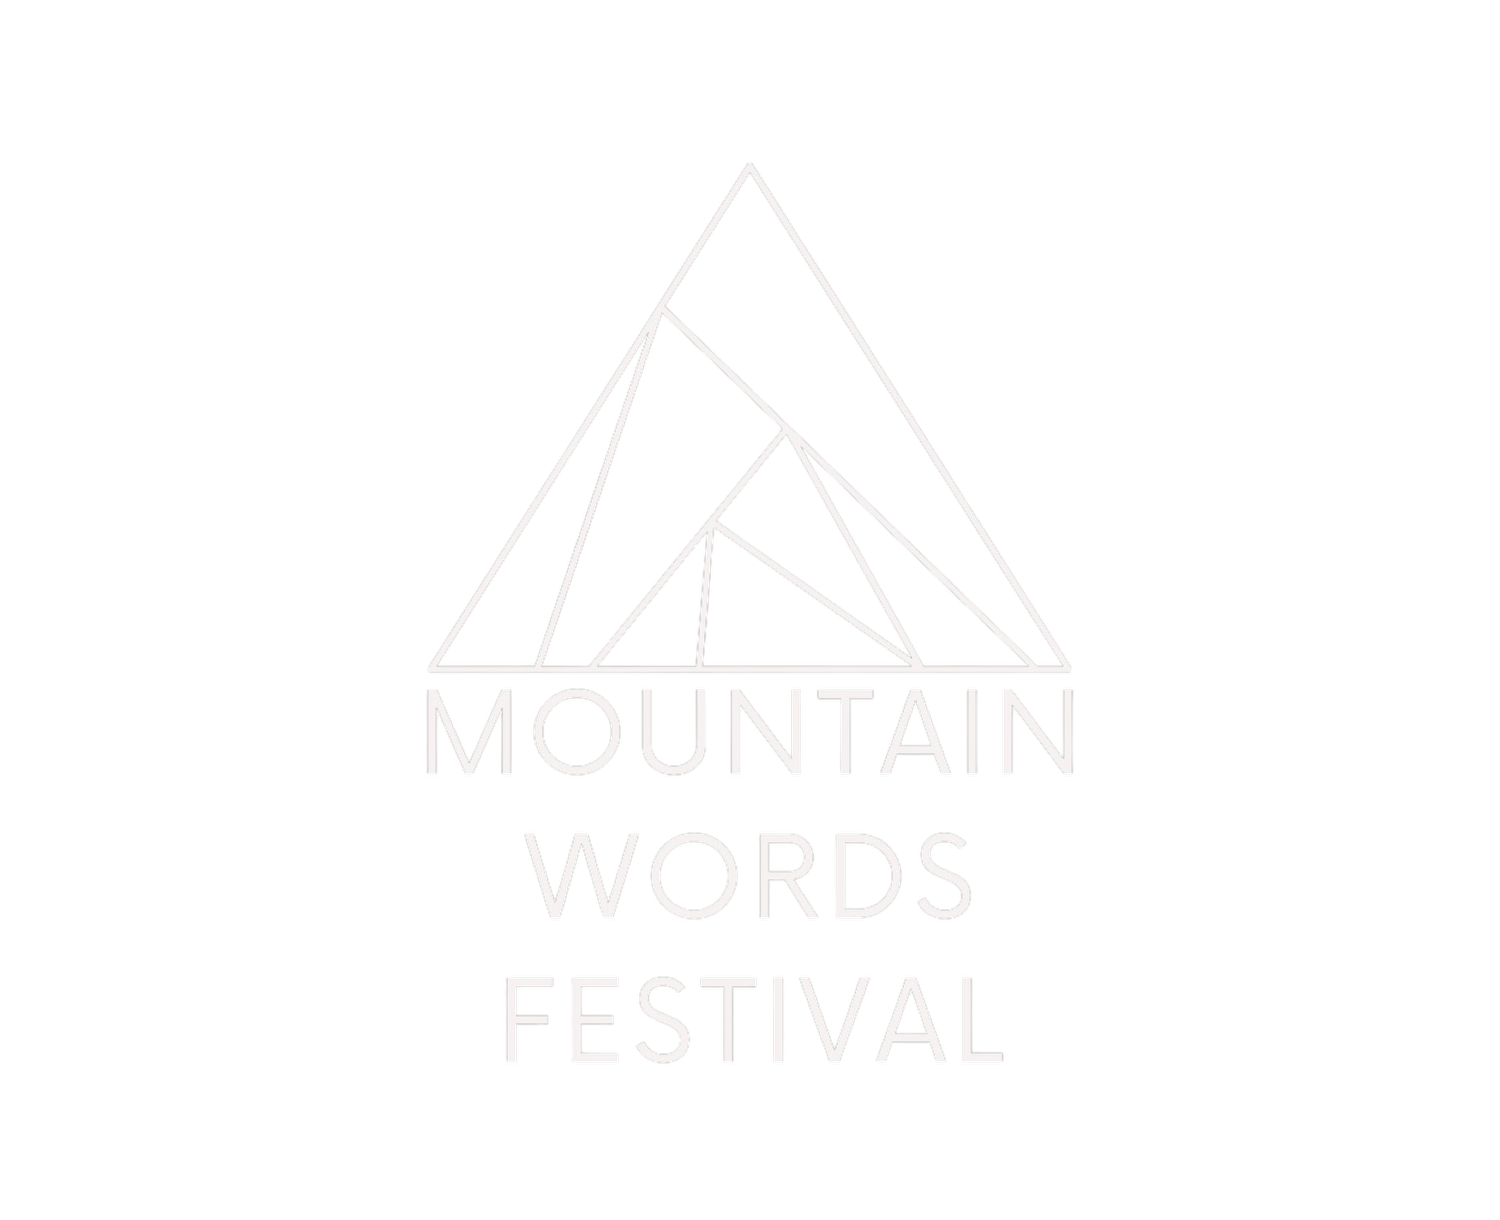 Mountain Words Festival